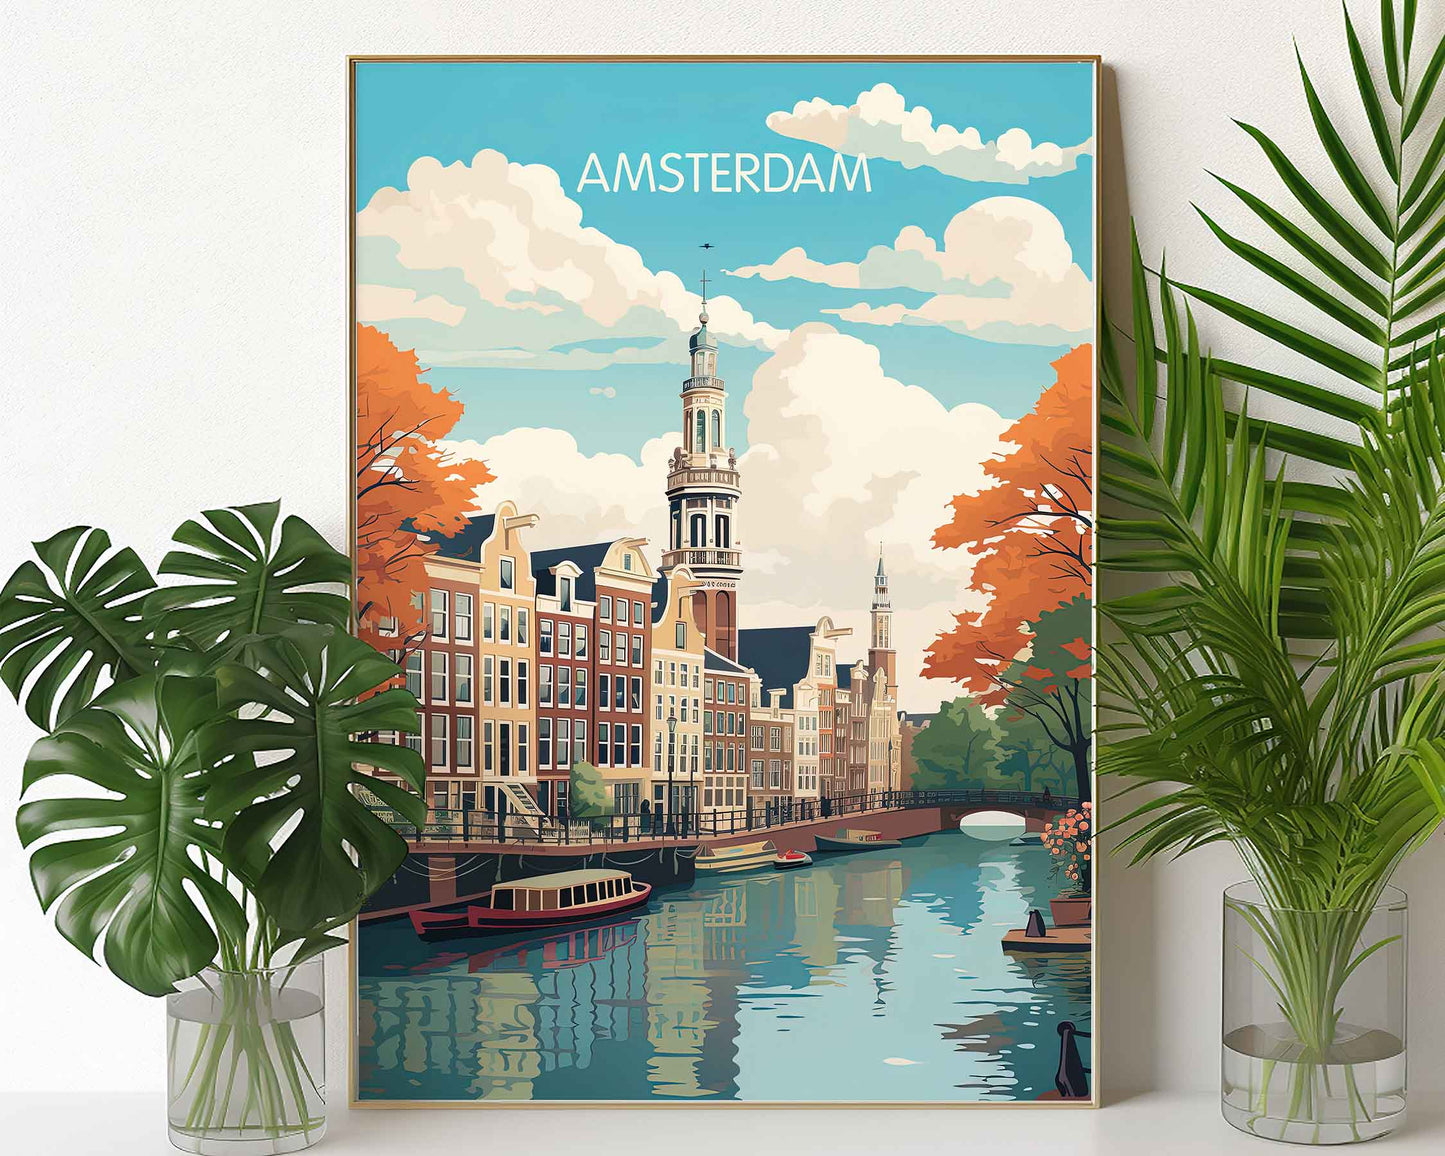 Framed Image of Amsterdam Travel Art Print Wall Poster Holland Illustration